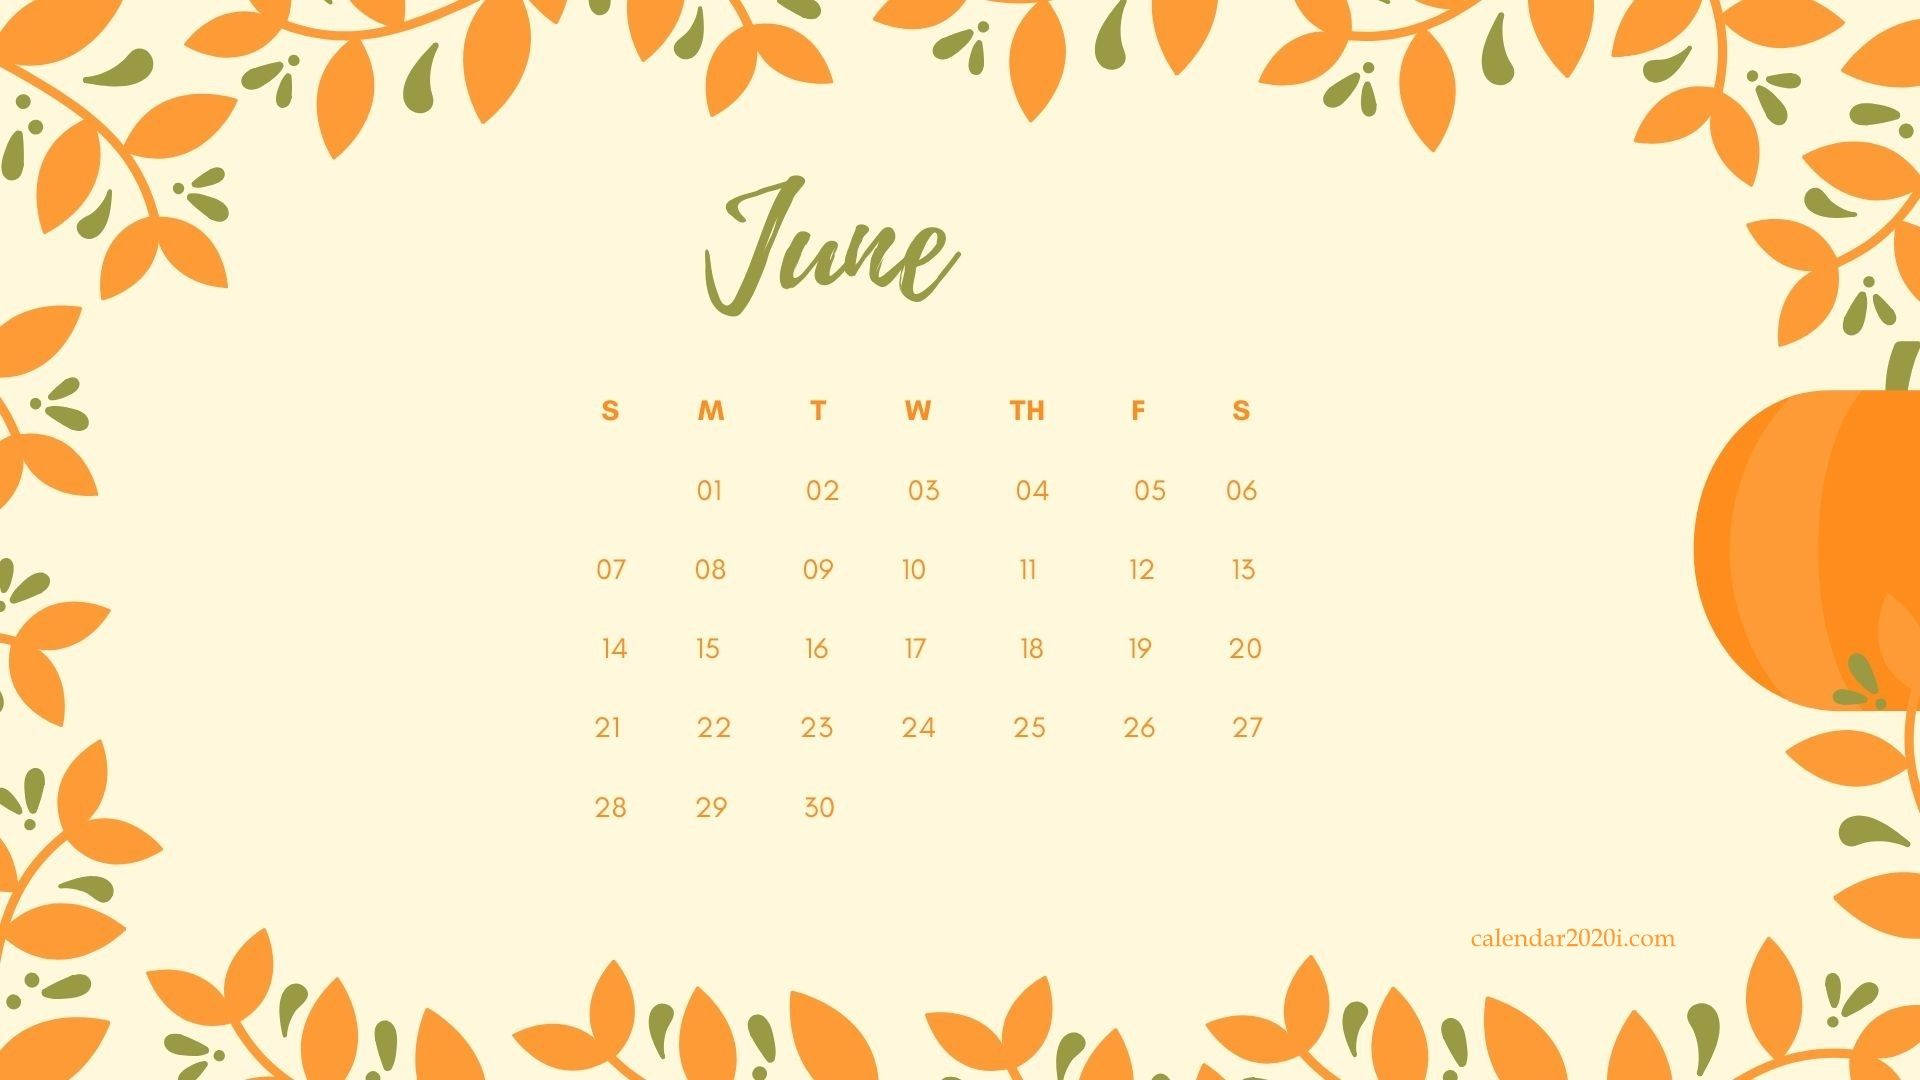 June Calendar In Orange